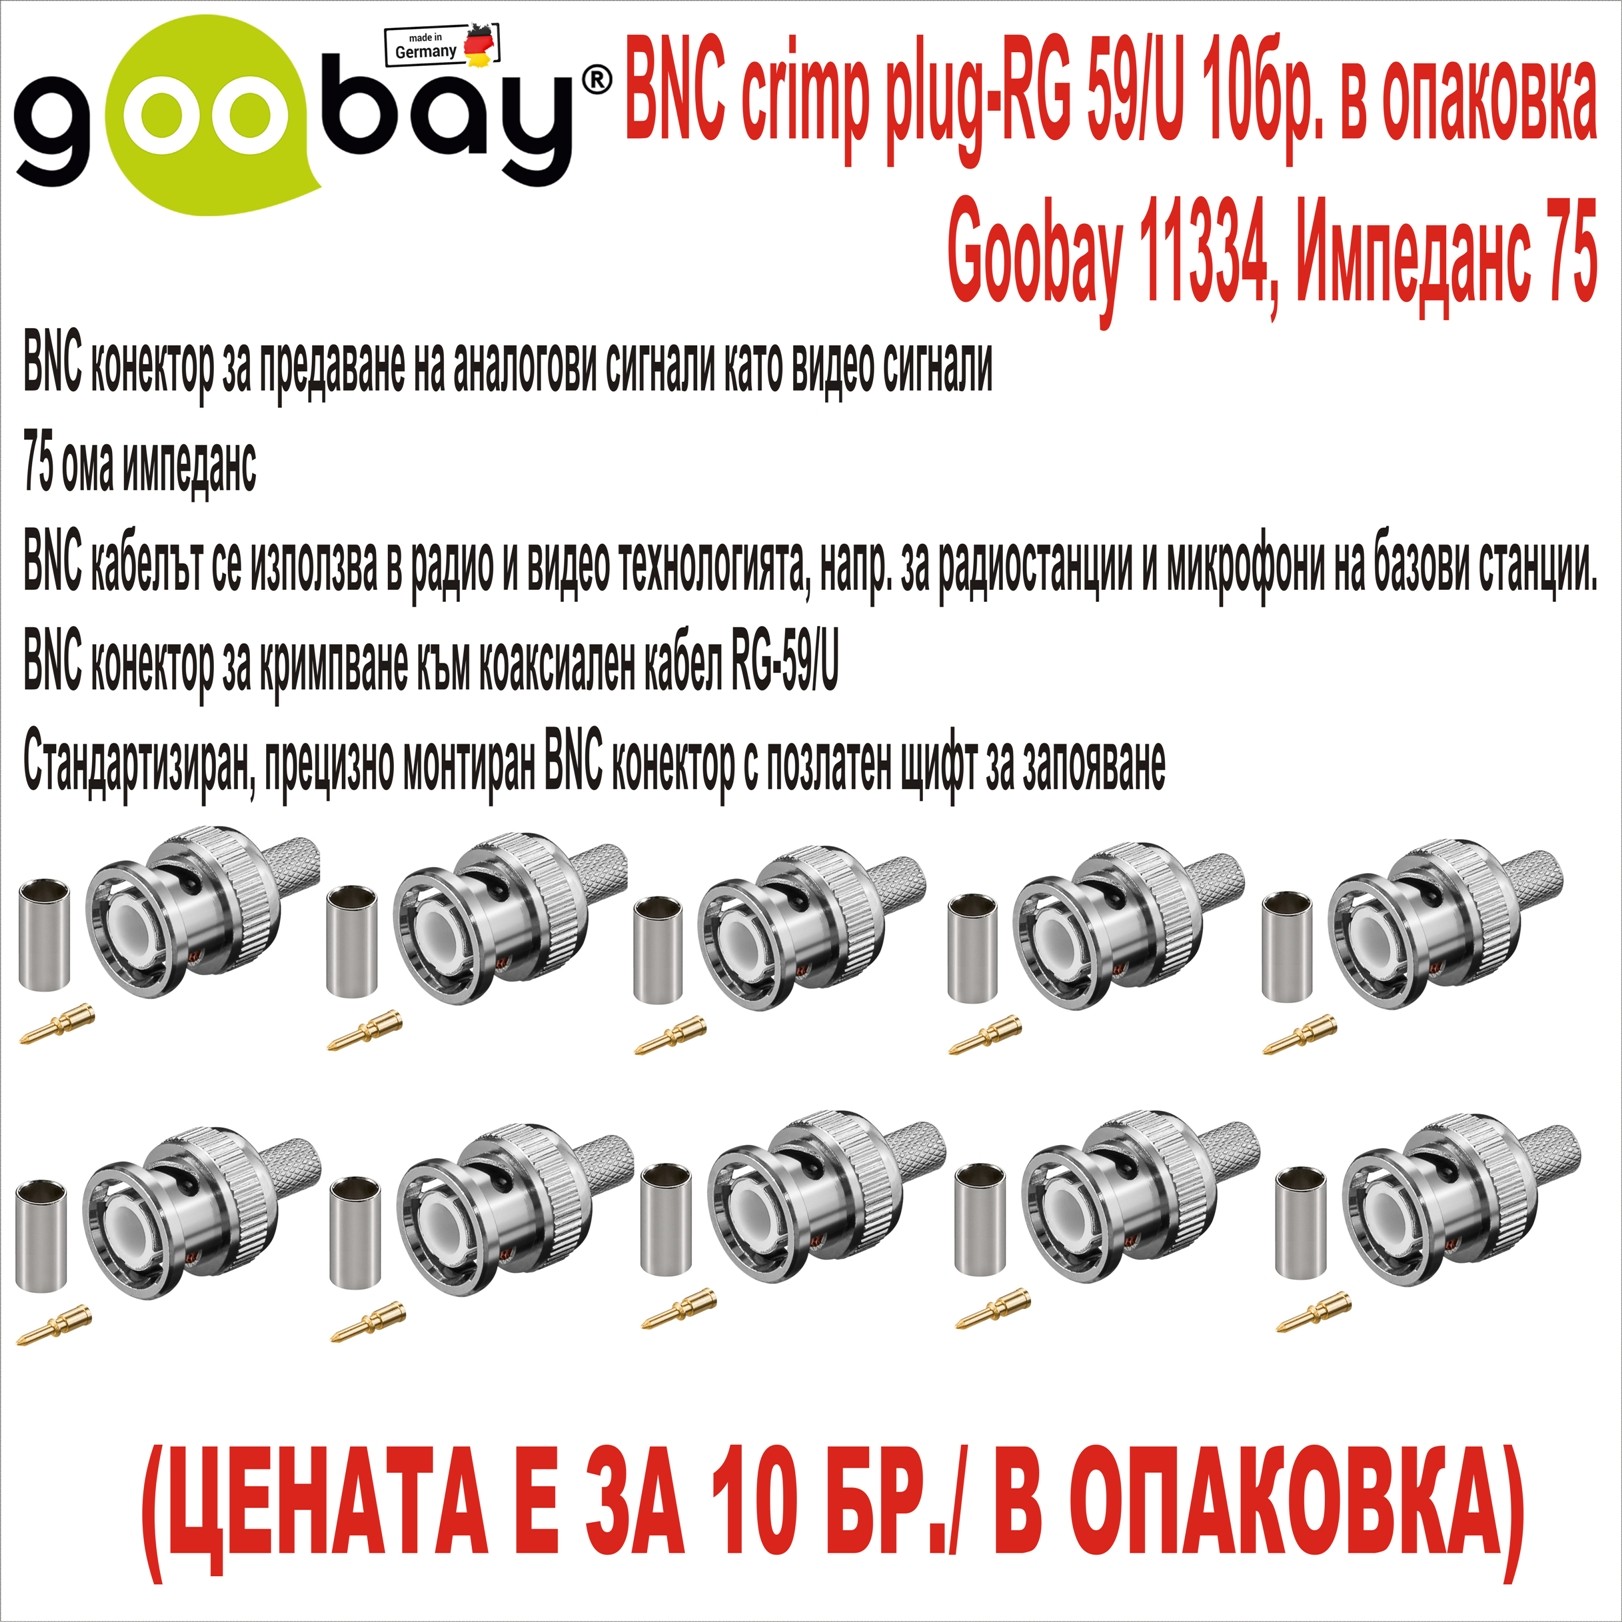 BNC crimp plug-RG 59U Goobay 11334 Импеданс 75